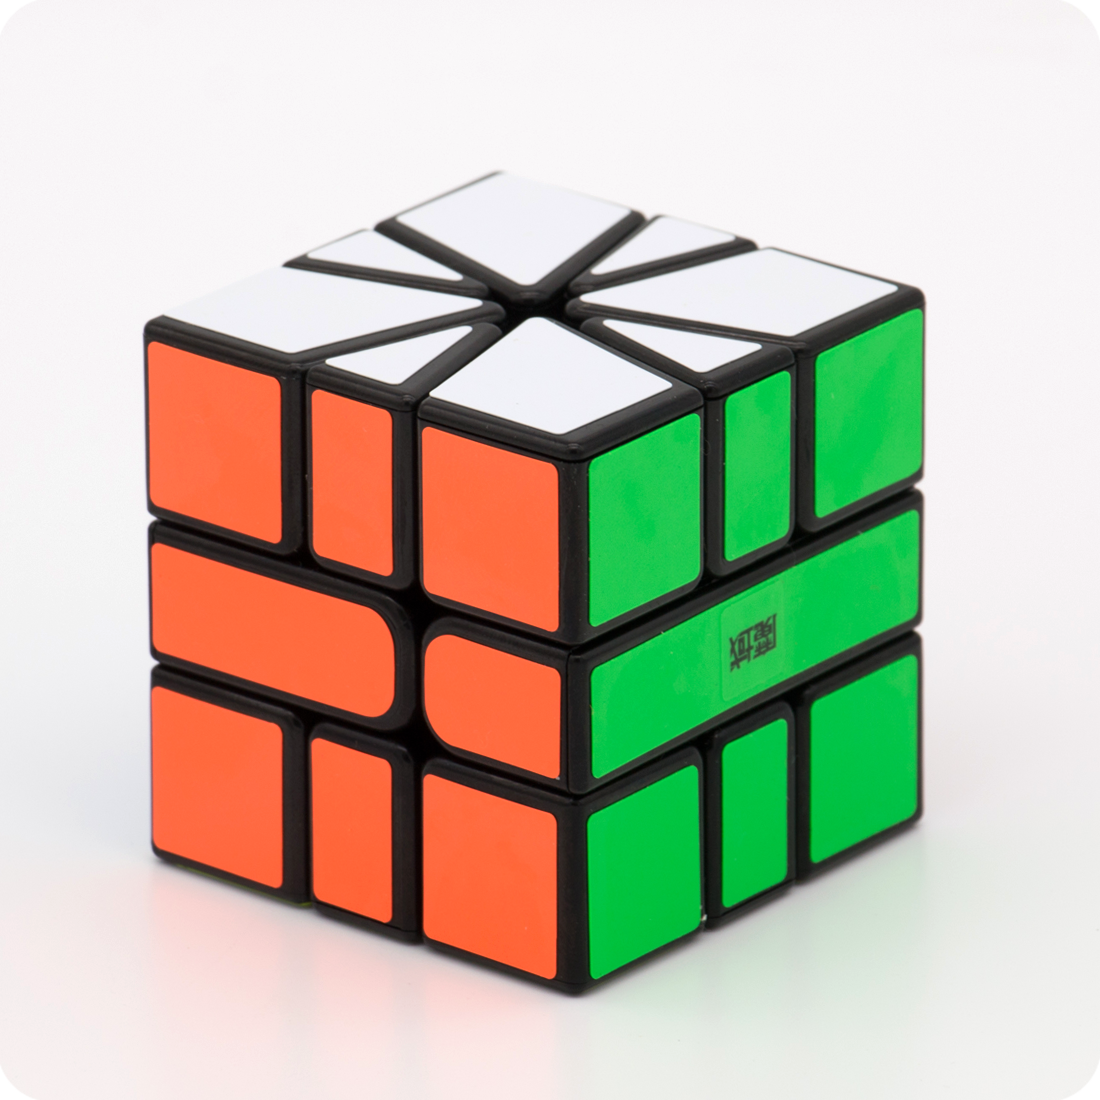 Square cube. Кубик Рубика 1 на 1. Кубик Рубика 1х1. MOYU кубик Рубика. Скваер1 кубик рубик.